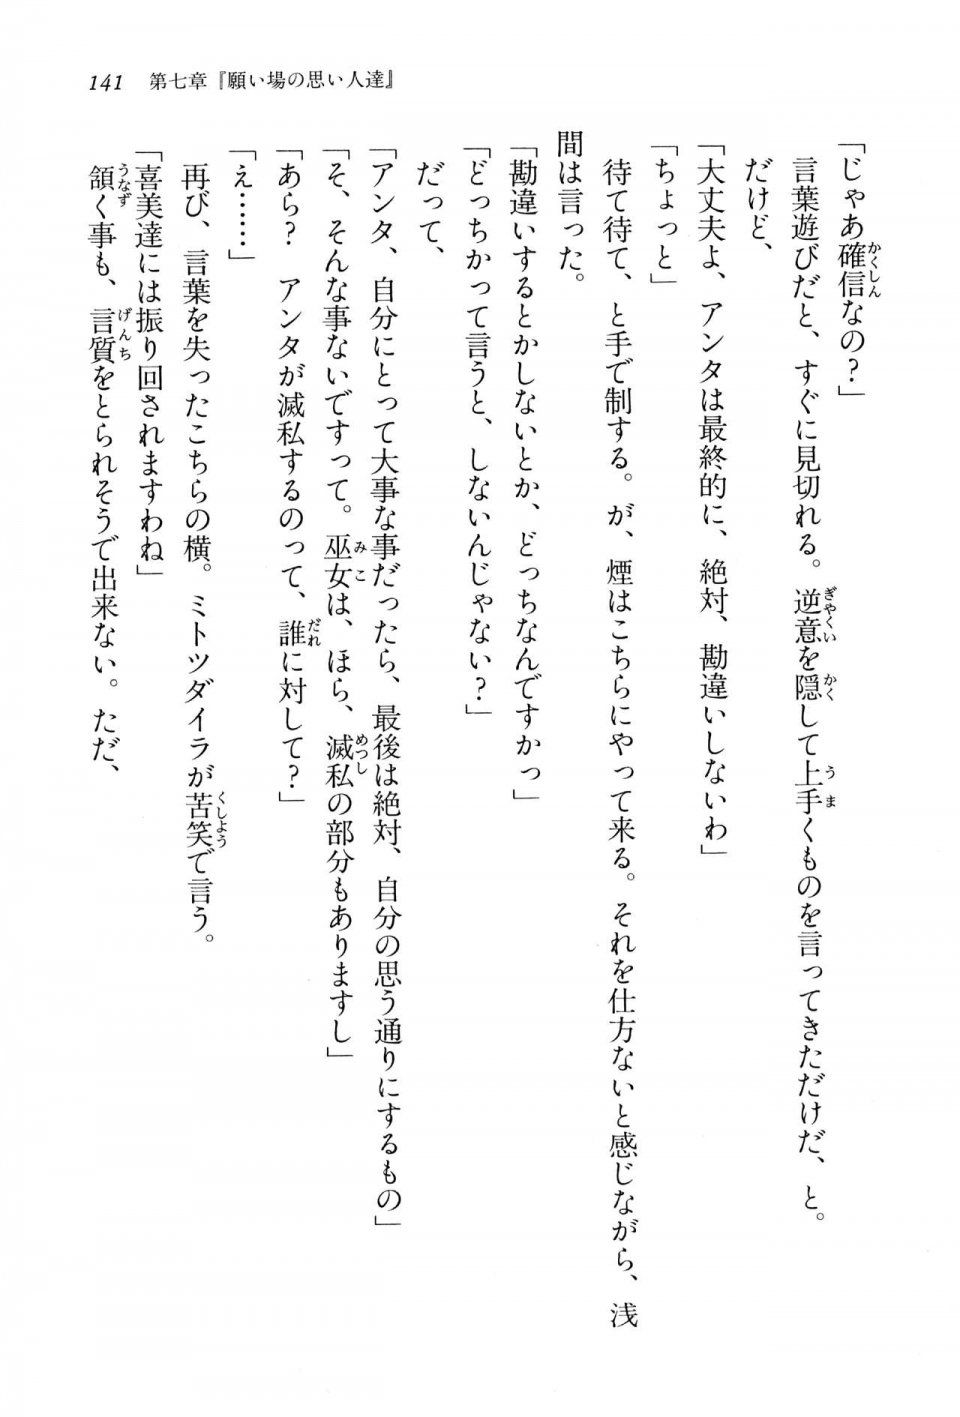 Kyoukai Senjou no Horizon BD Special Mininovel Vol 2(1B) - Photo #145